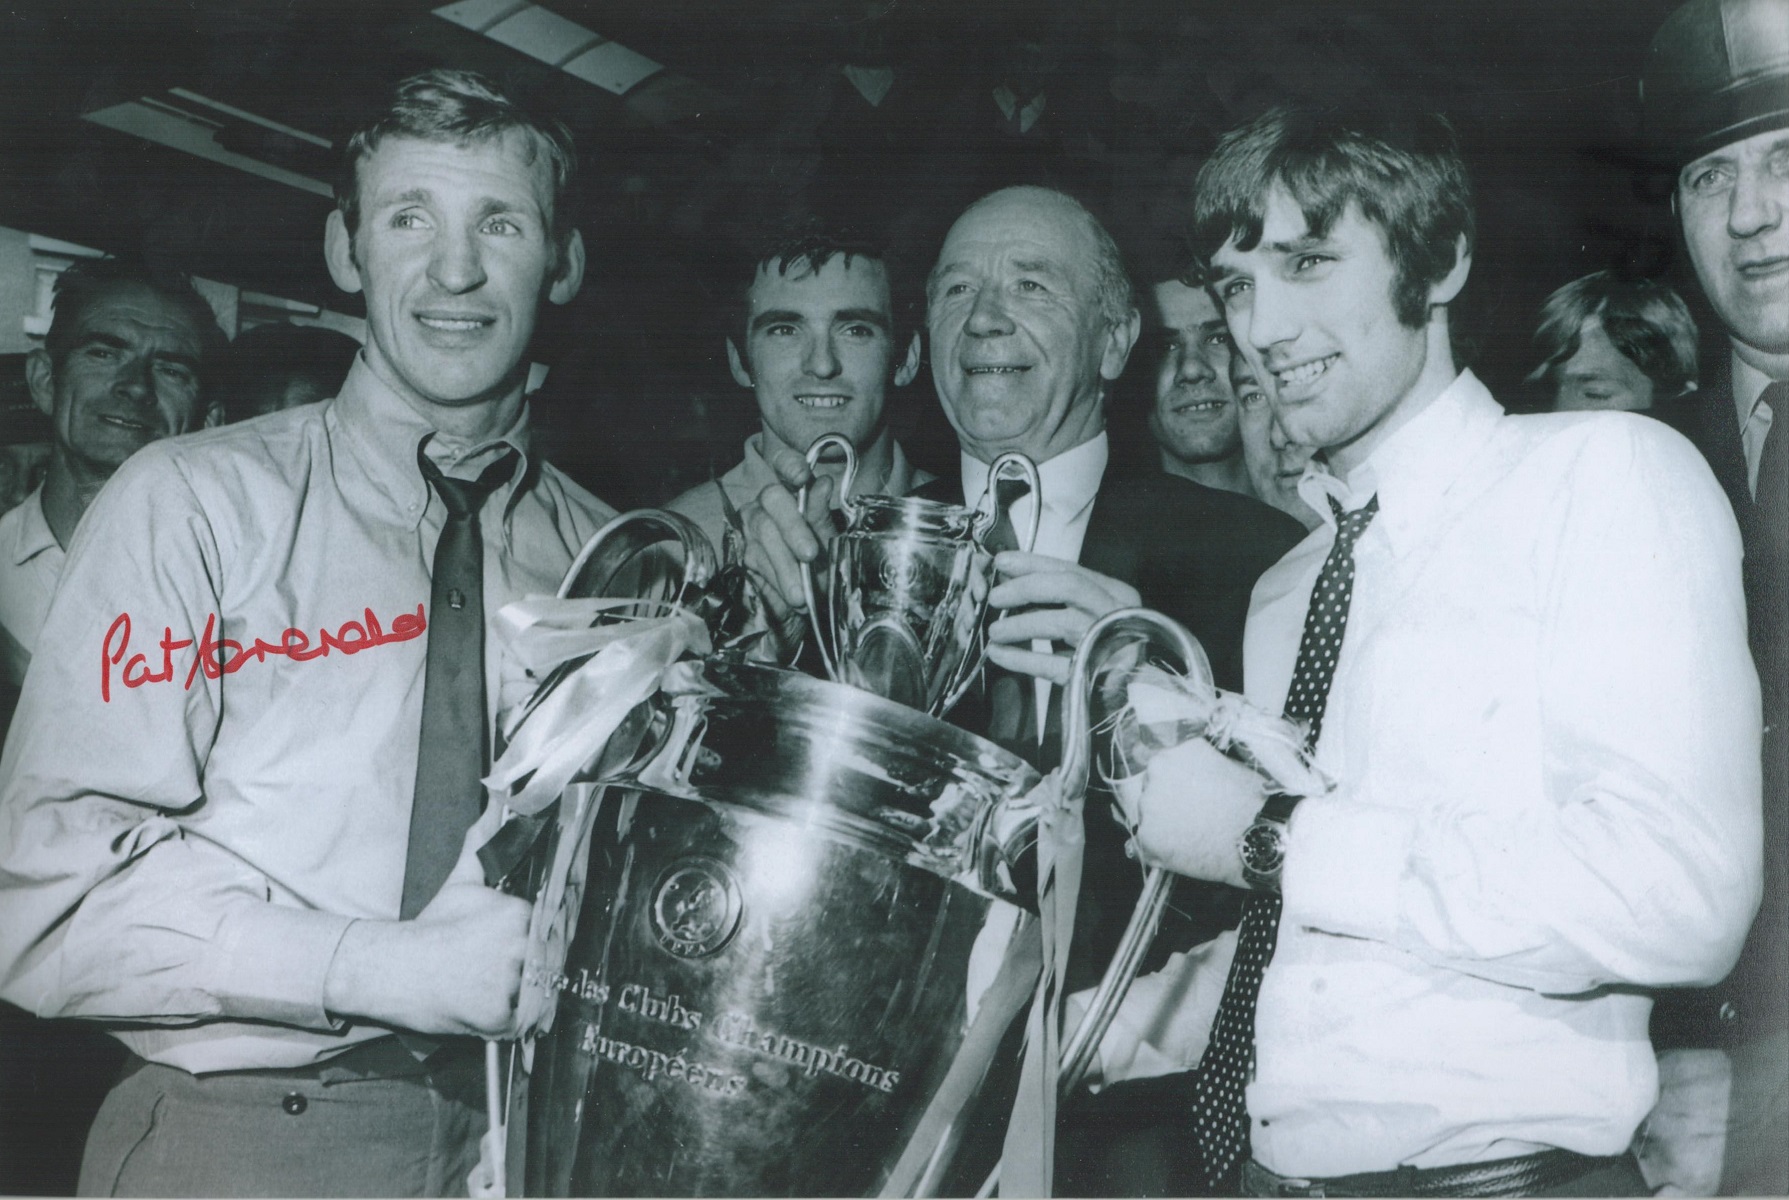 Scottish Football Legend Pat Crerand hand signed 12x8 Black and White Photo. Patrick Timothy Crerand